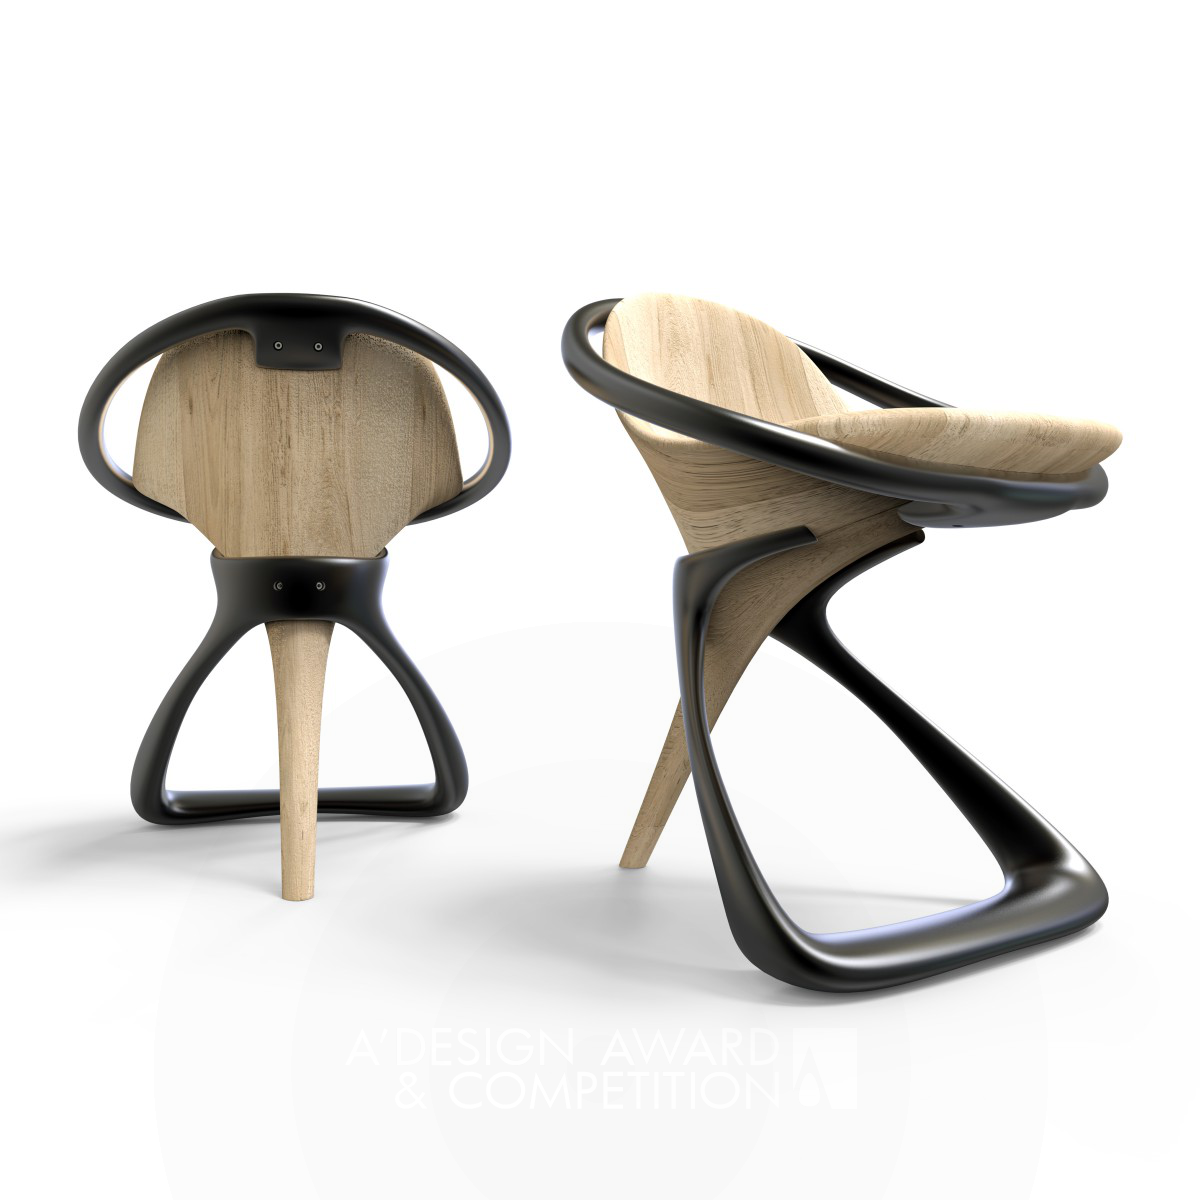 Alpha Chair Furniture by Wei Jingye, Liu Mai and Wang Ruilin Bronze Furniture Design Award Winner 2019 